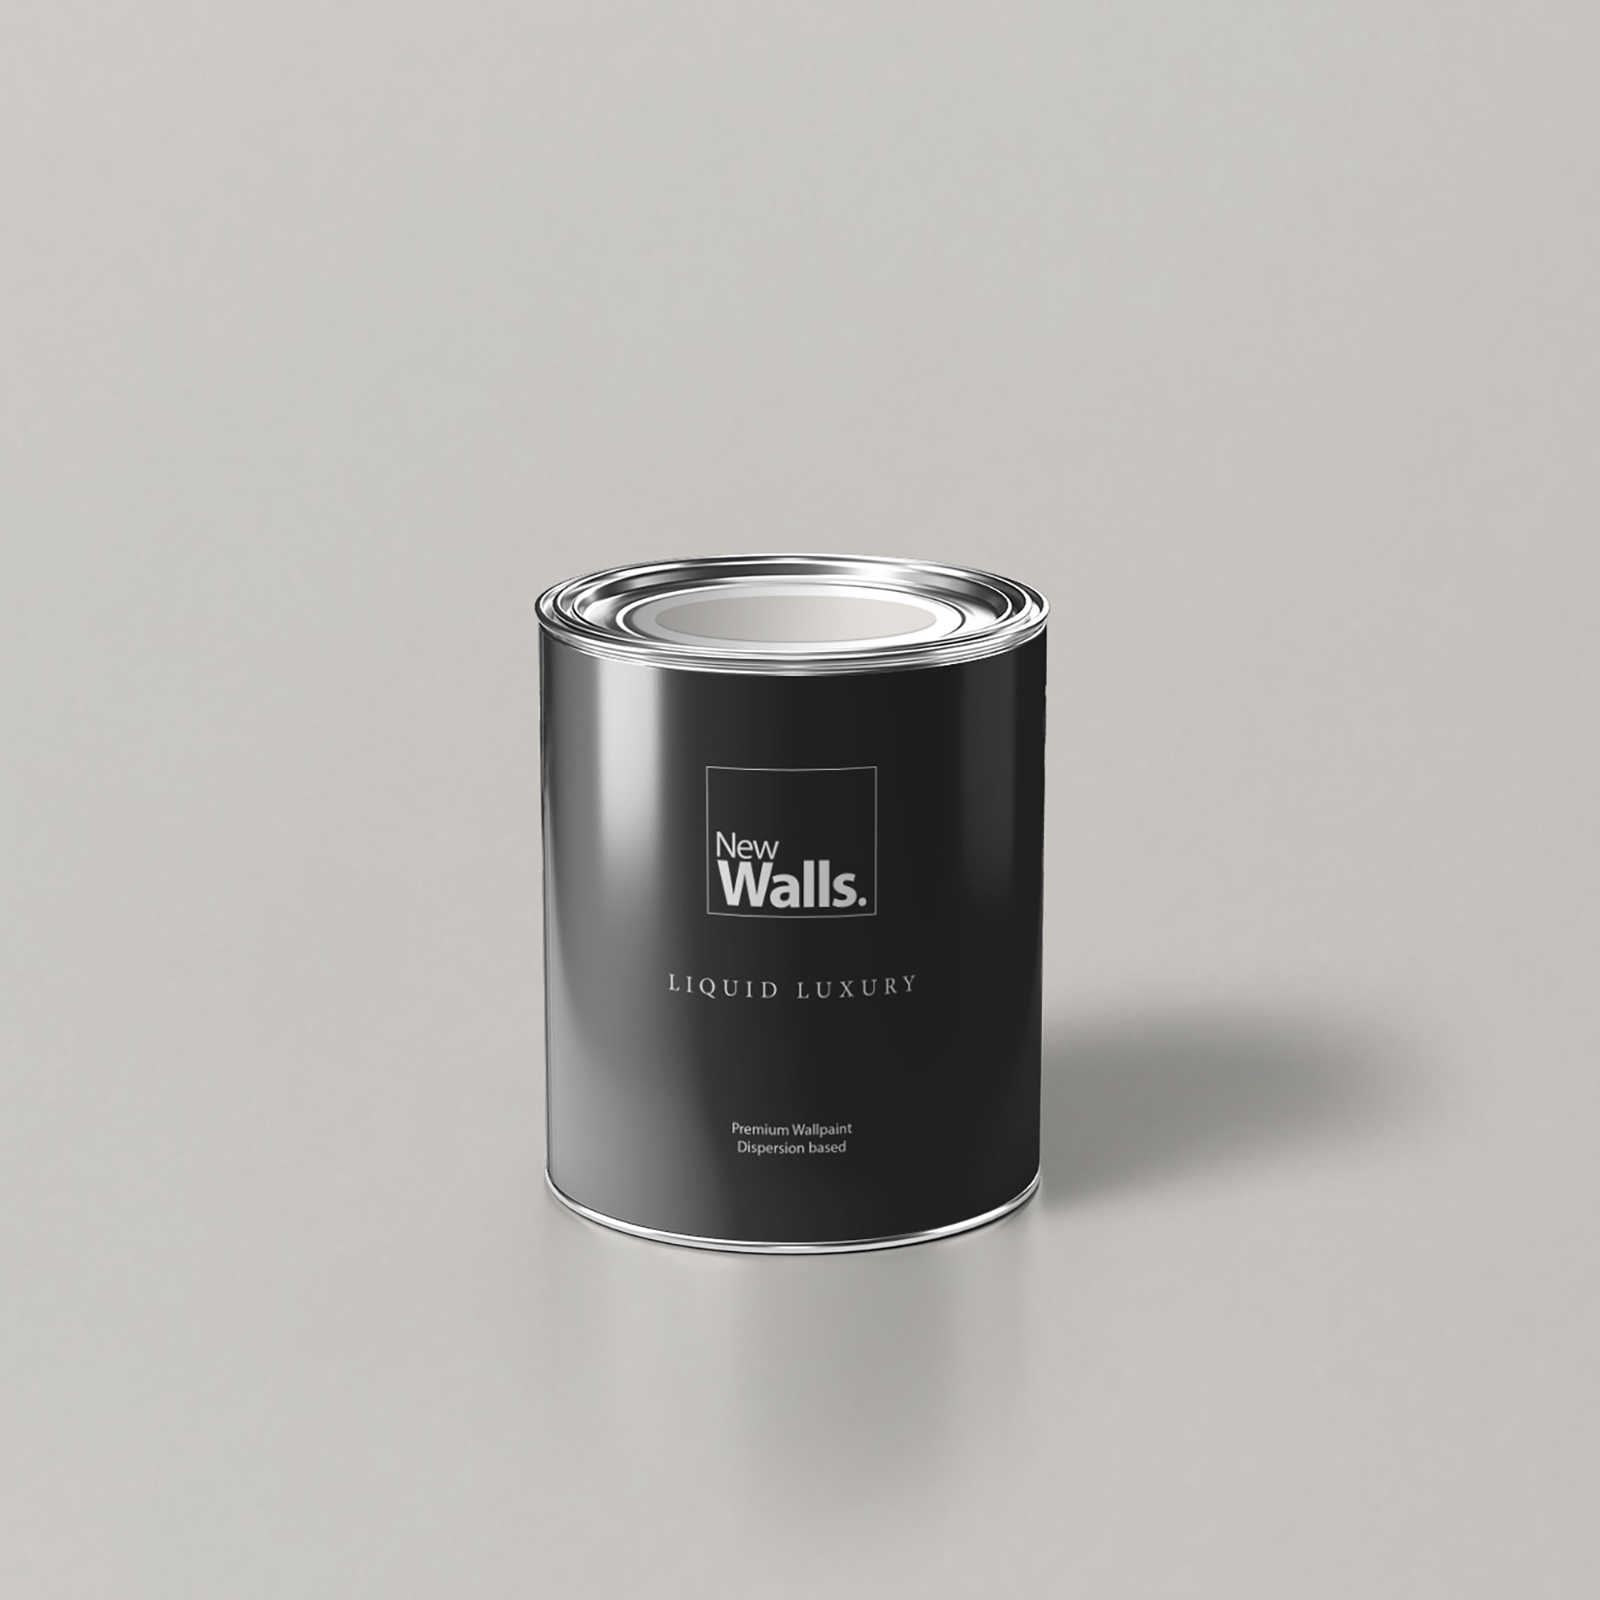         Premium Wall Paint timeless light grey »Creamy Grey« NW108 – 1 litre
    